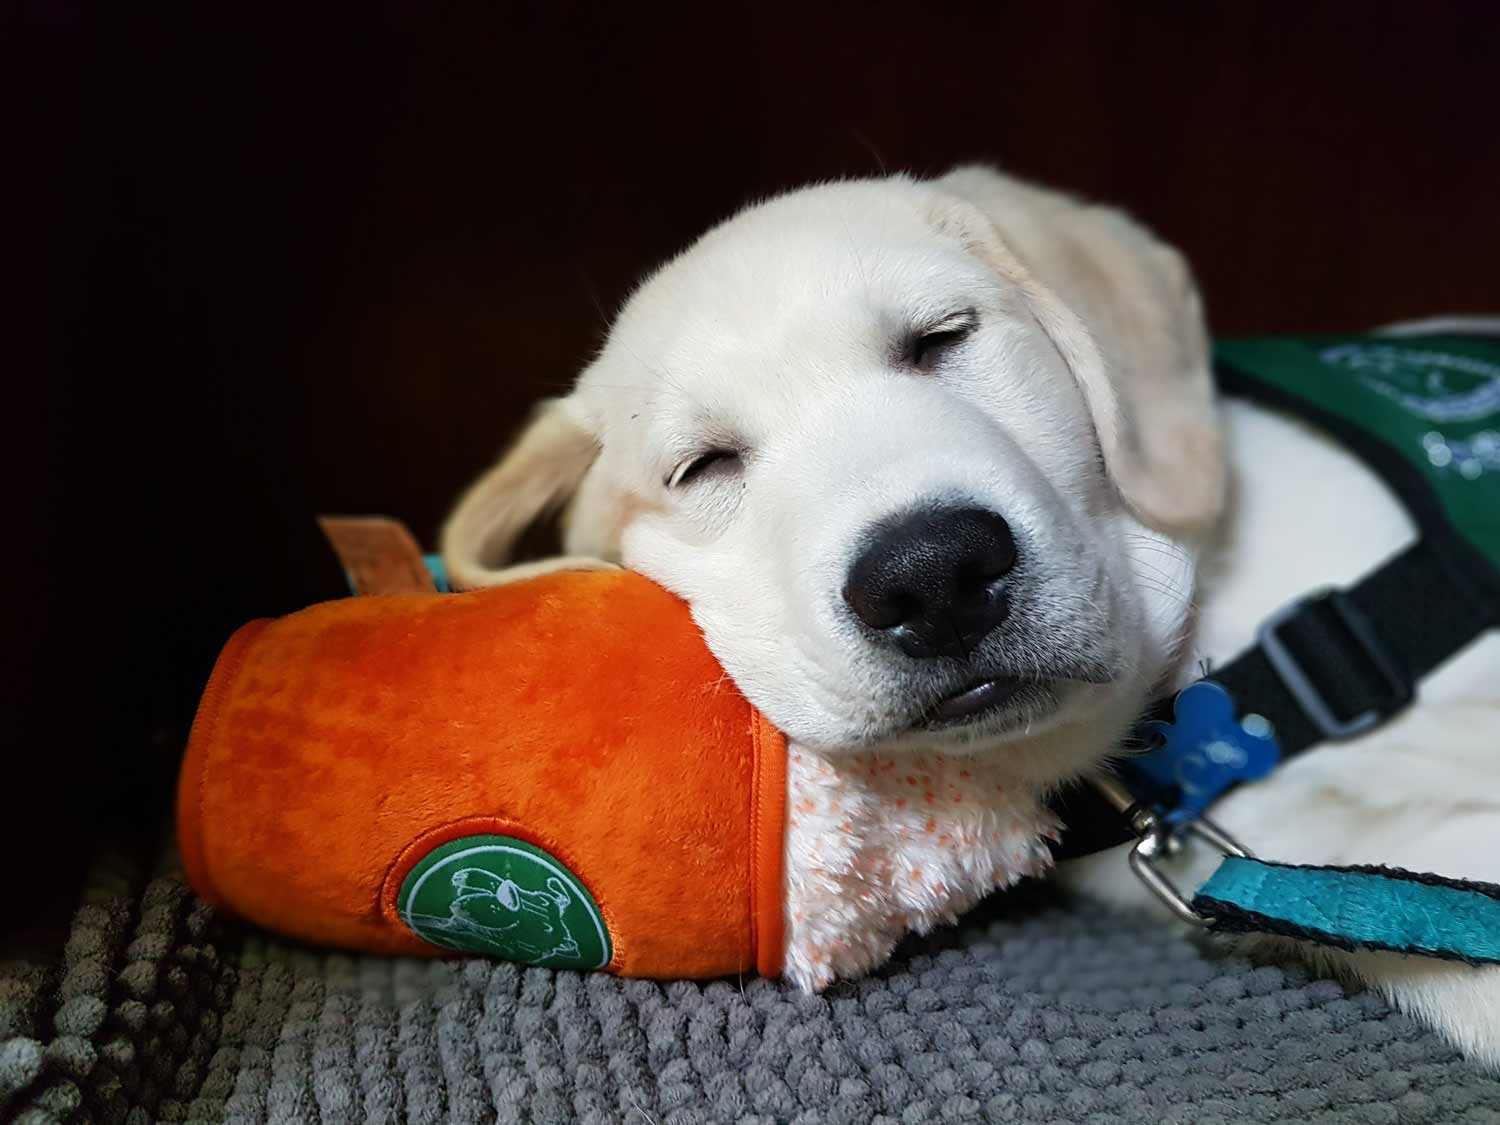 Golden Labrador puppy wearing a green jacket asleep on an orange stuffed plus toy.